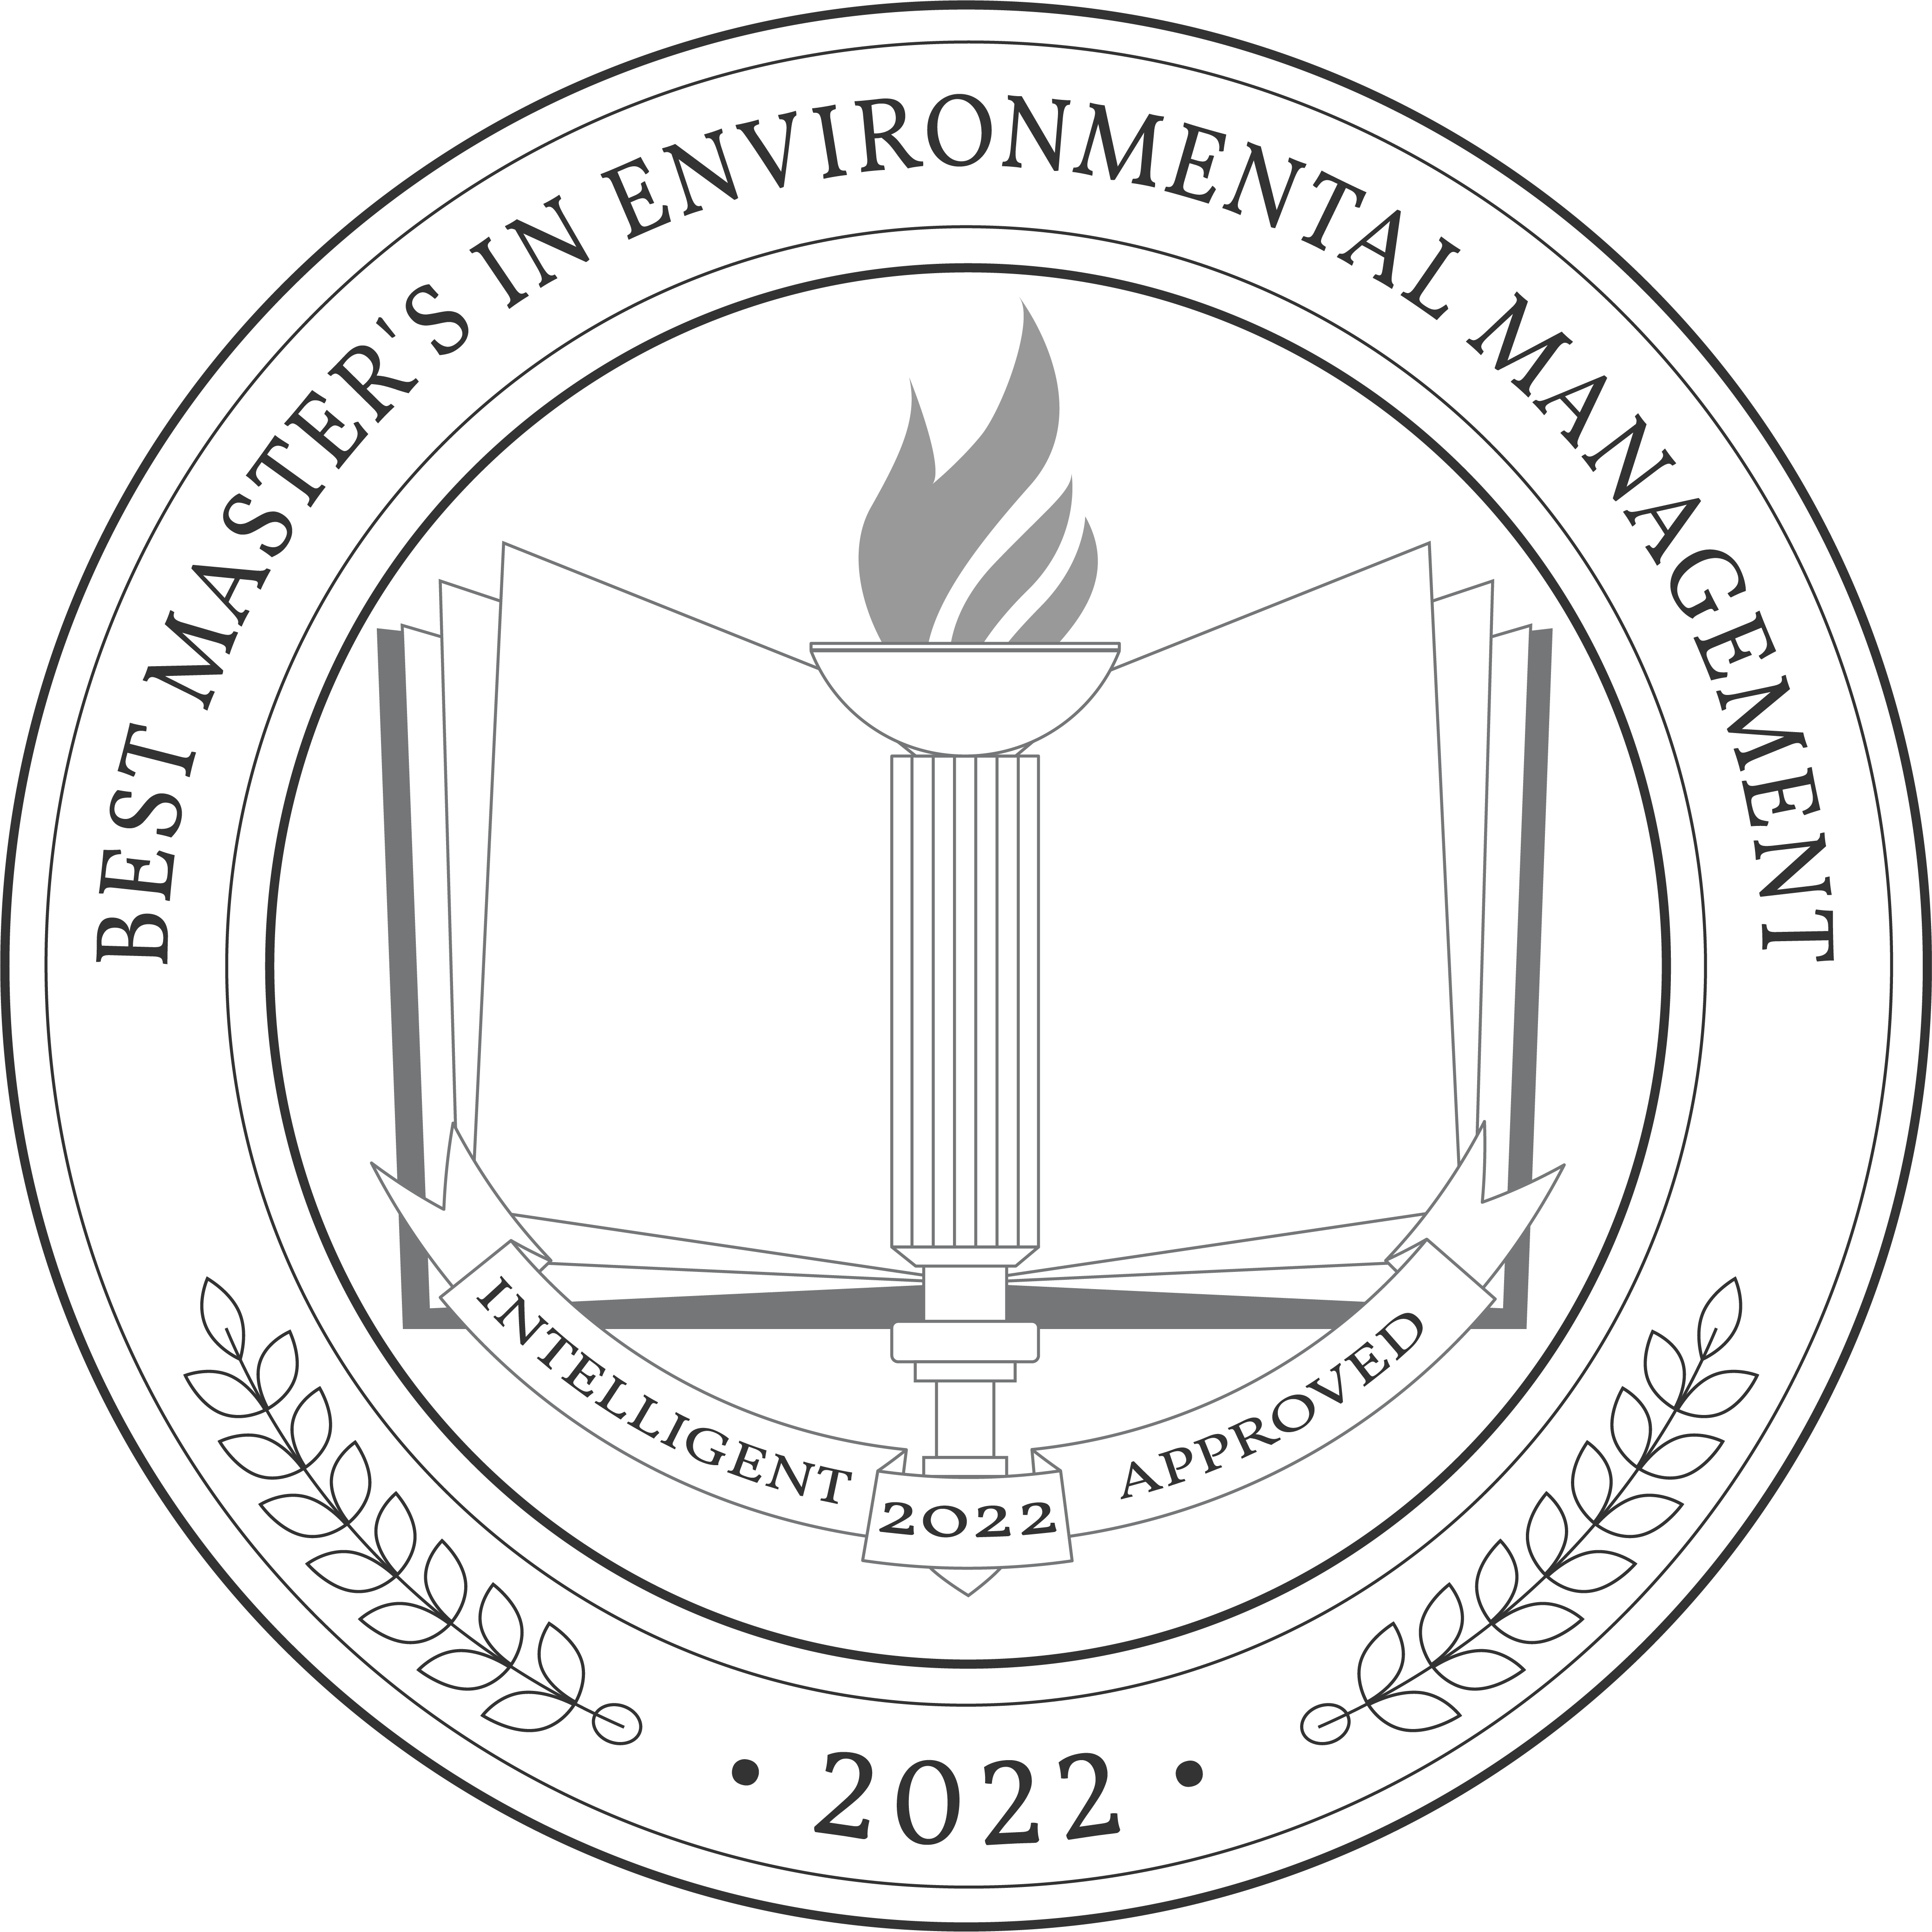 Best Online Master's in Environmental Management Degree Programs